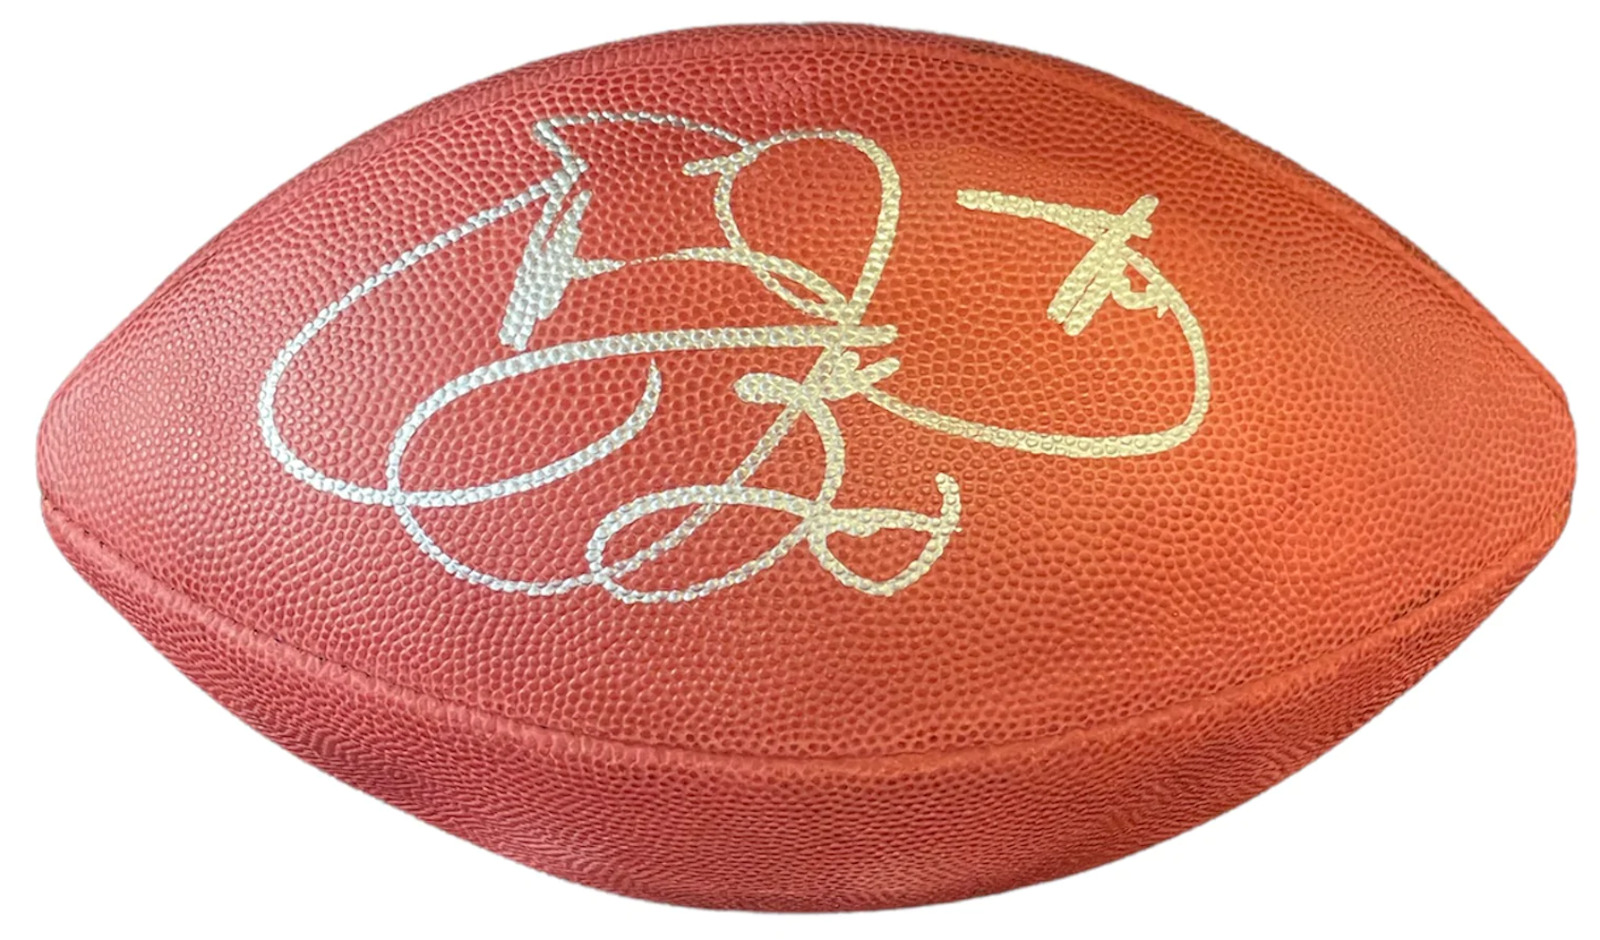 Emmitt Smith Autographed Official NFL Football (JSA)